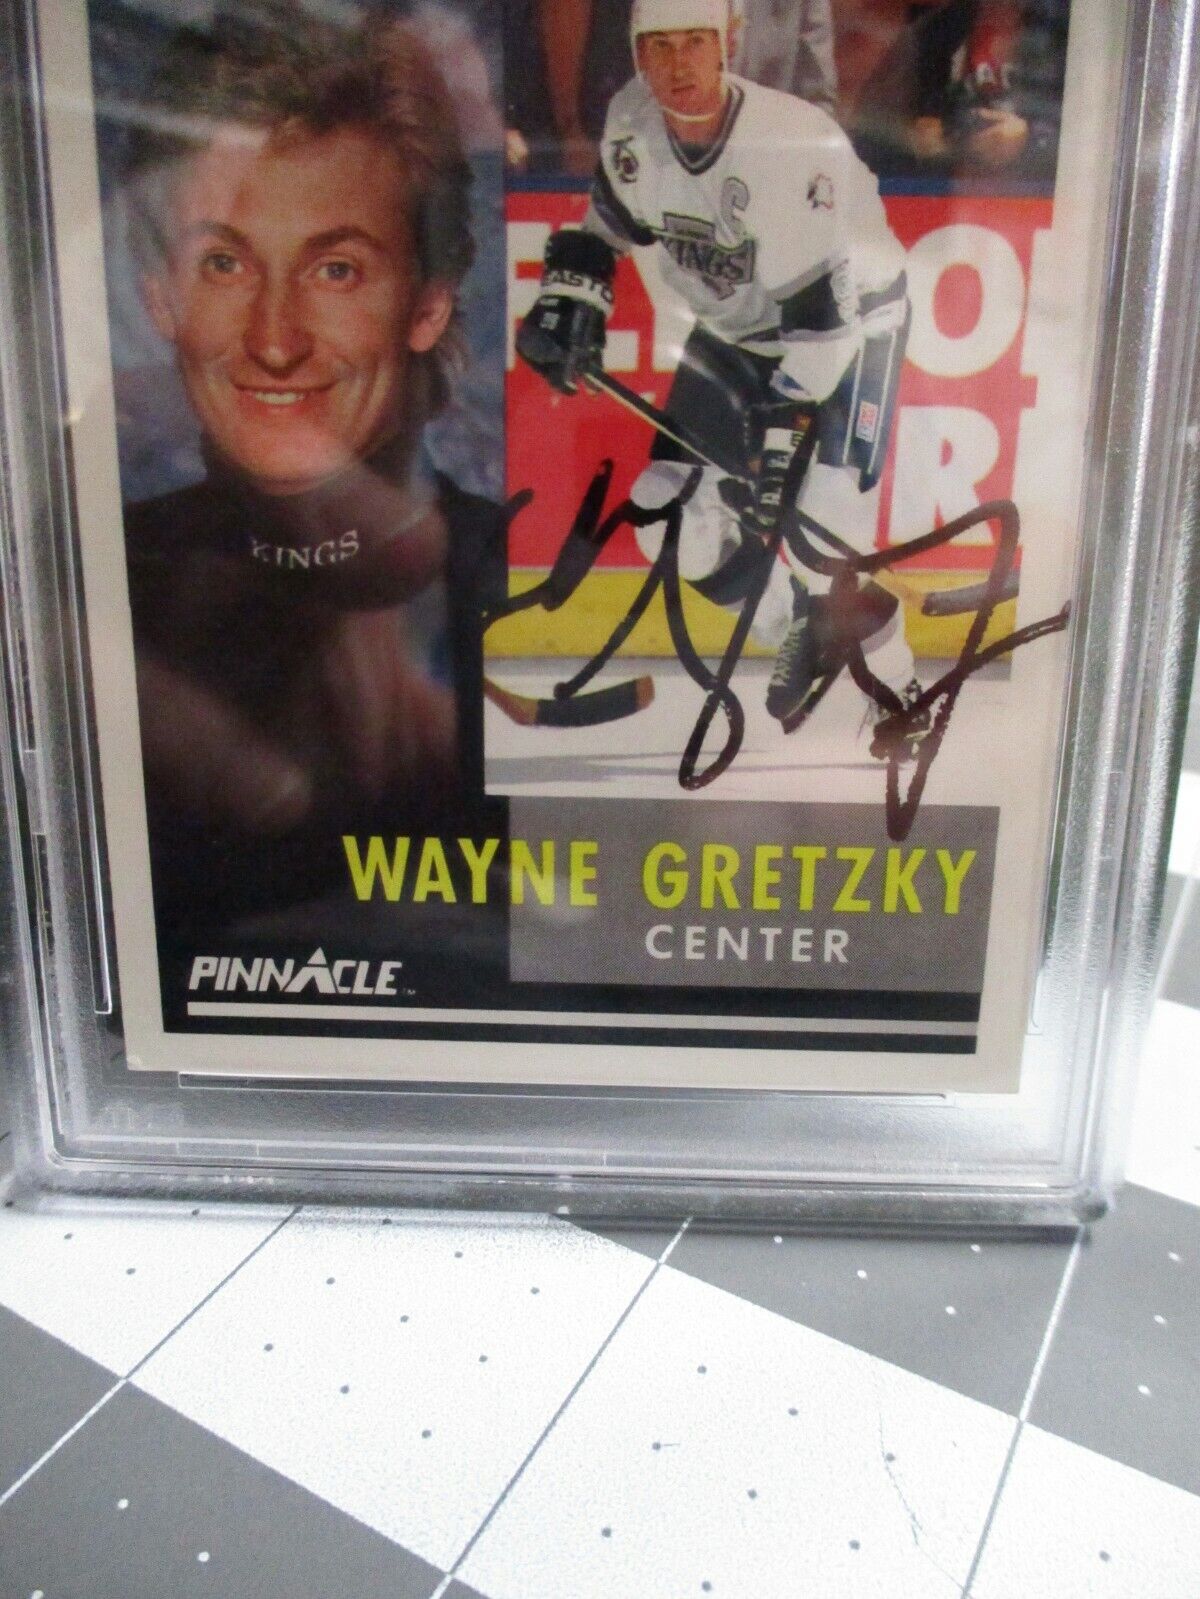 Wayne Gretzky autographed 1991-92 Pinnacle  100 PSA SLABBED  84405864